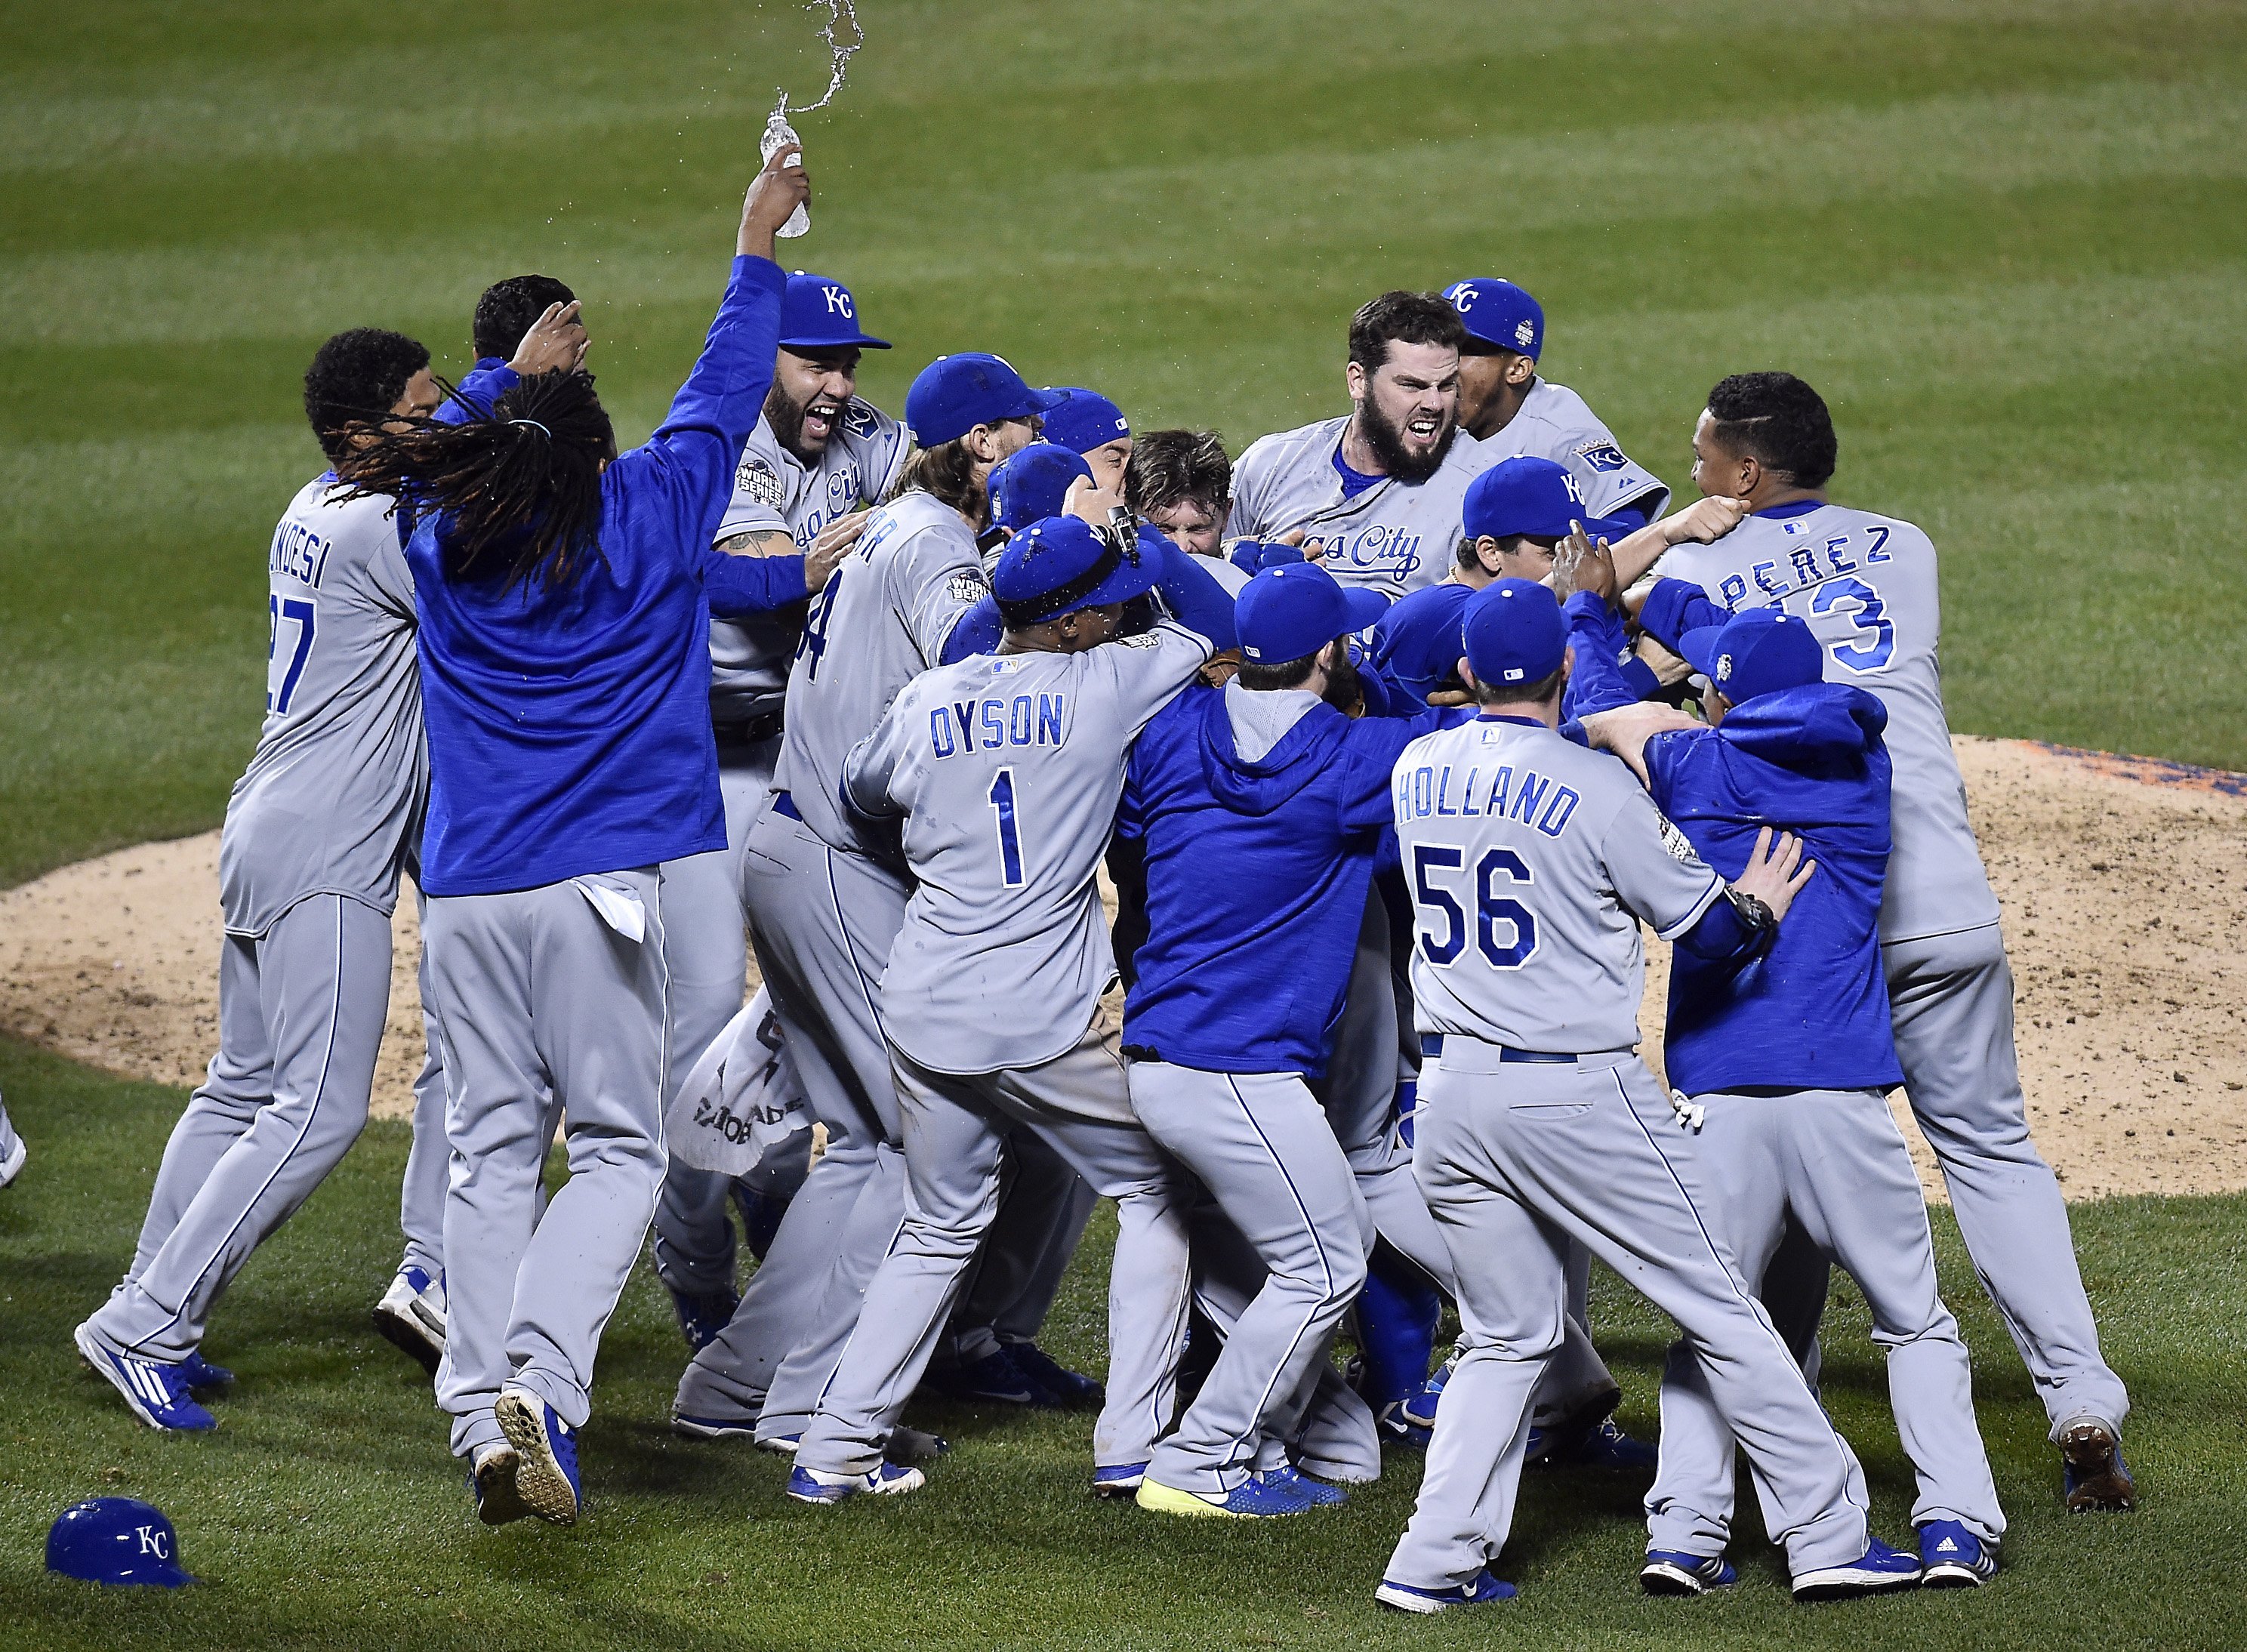 Kansas City celebrates Royals' World Series championship with